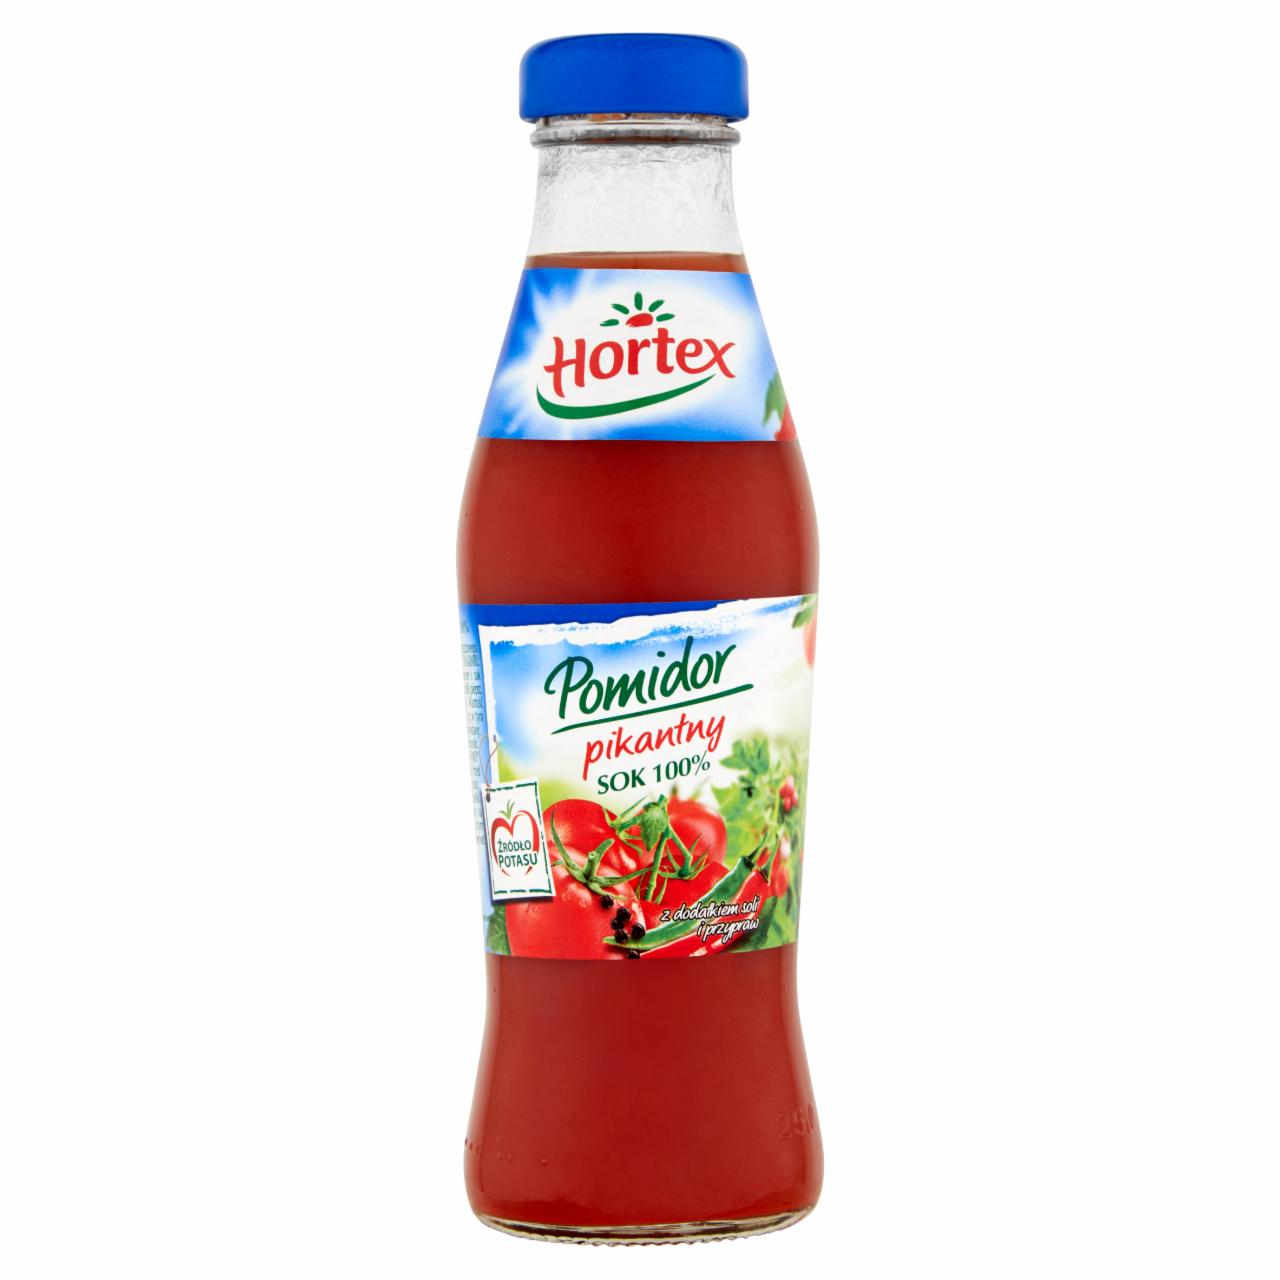 Zdjęcia - Hortex Pomidor pikantny Sok 100% 250 ml